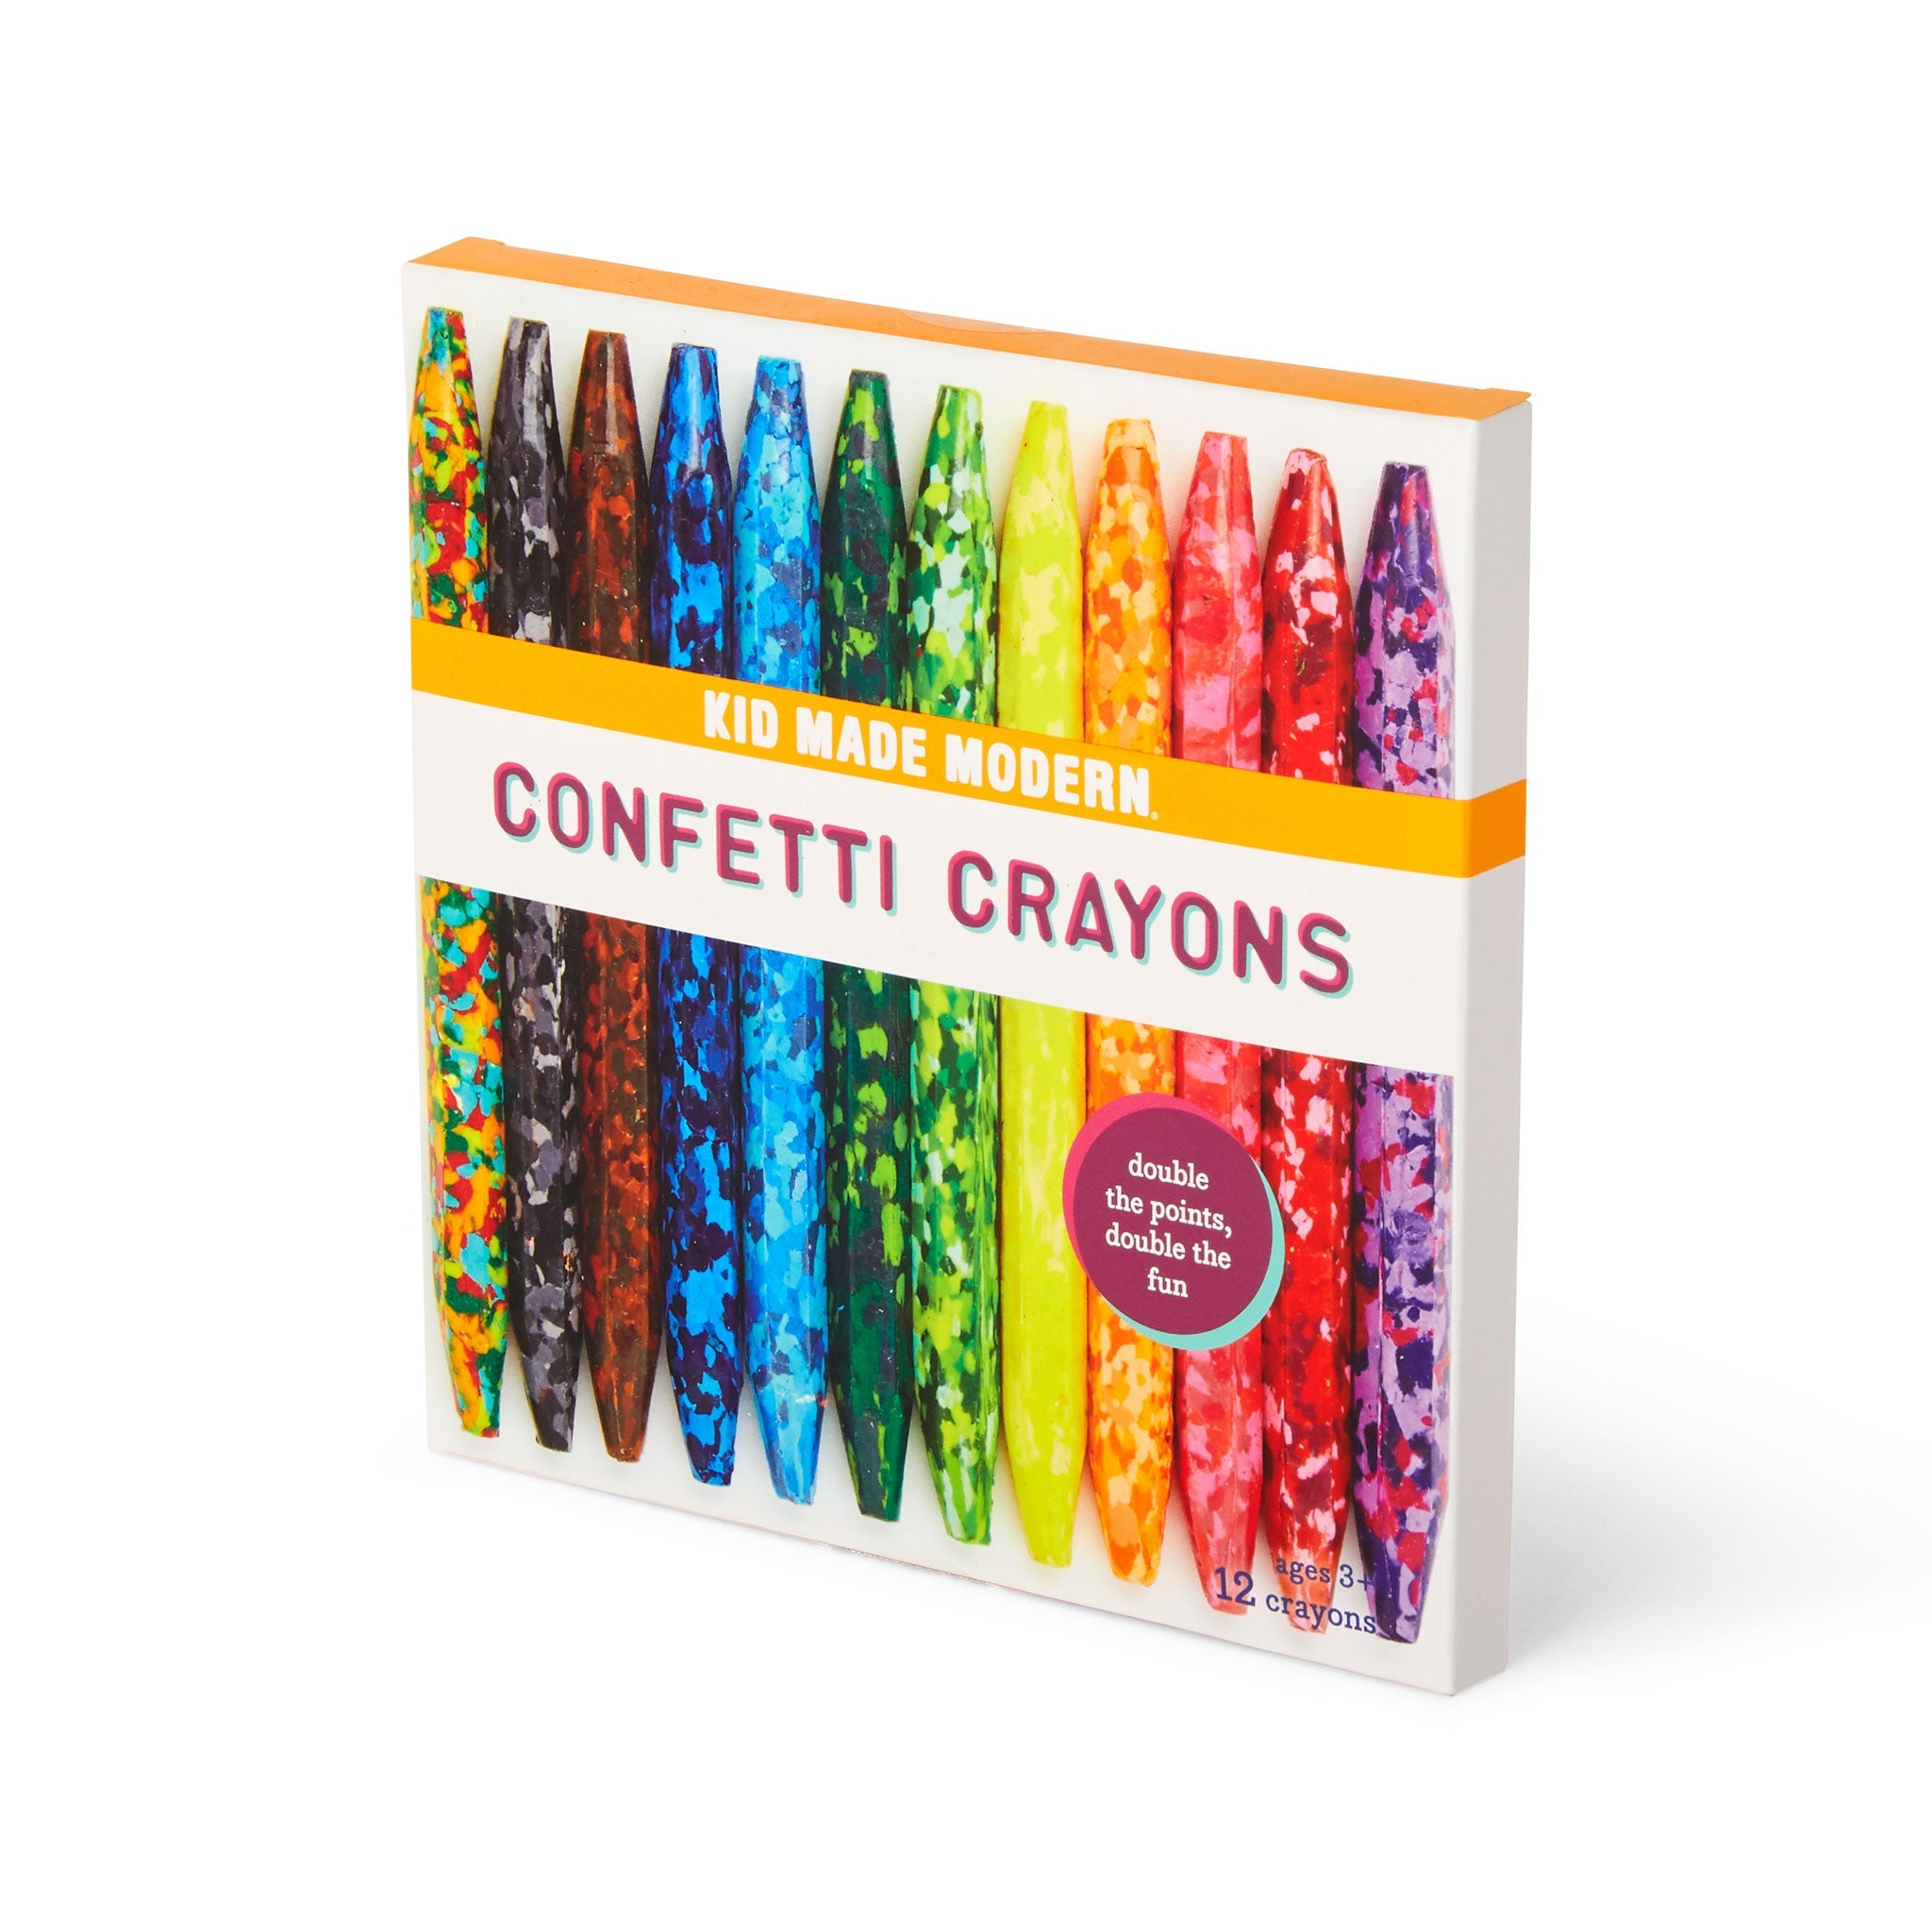 Kid Made Modern Confetti Crayons Craft